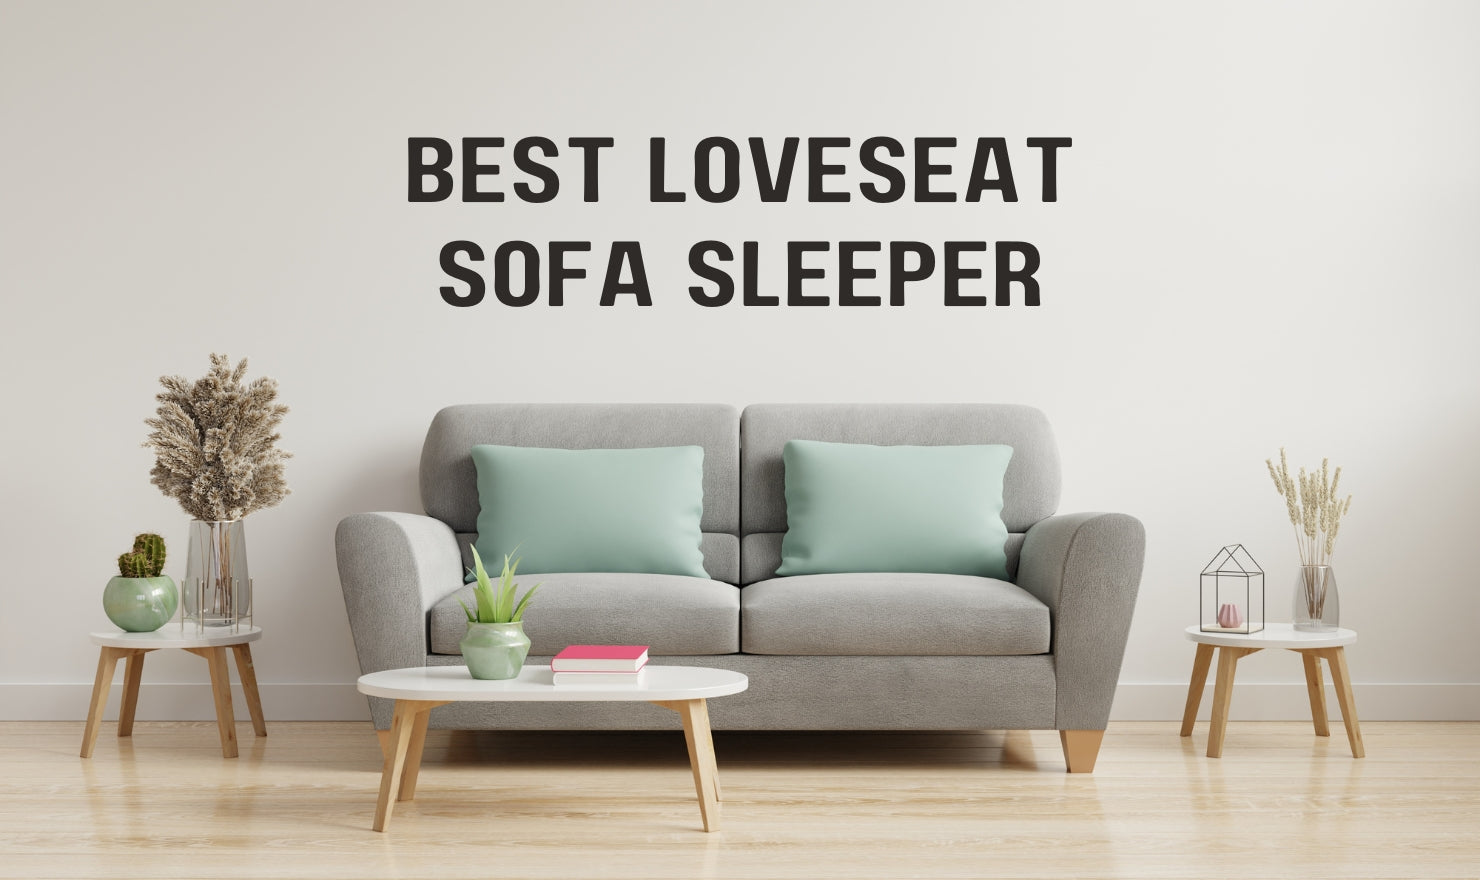 Best Loveseat Sofa Sleeper